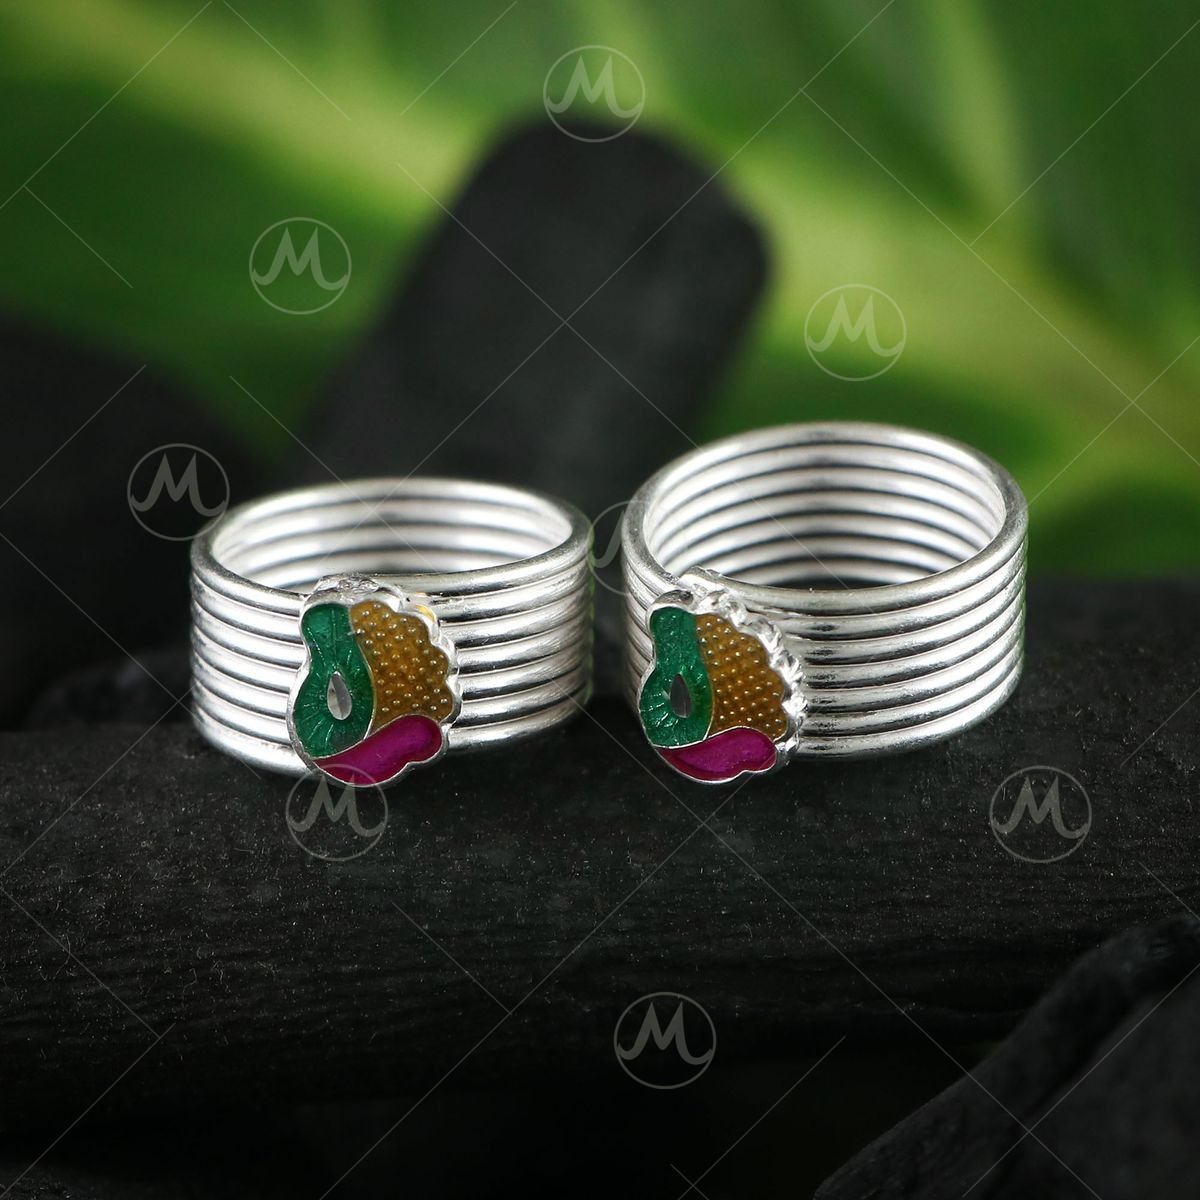 Pin by Akhila on toe rings | Sterling silver toe rings, Toe ring designs,  Gold rings fashion